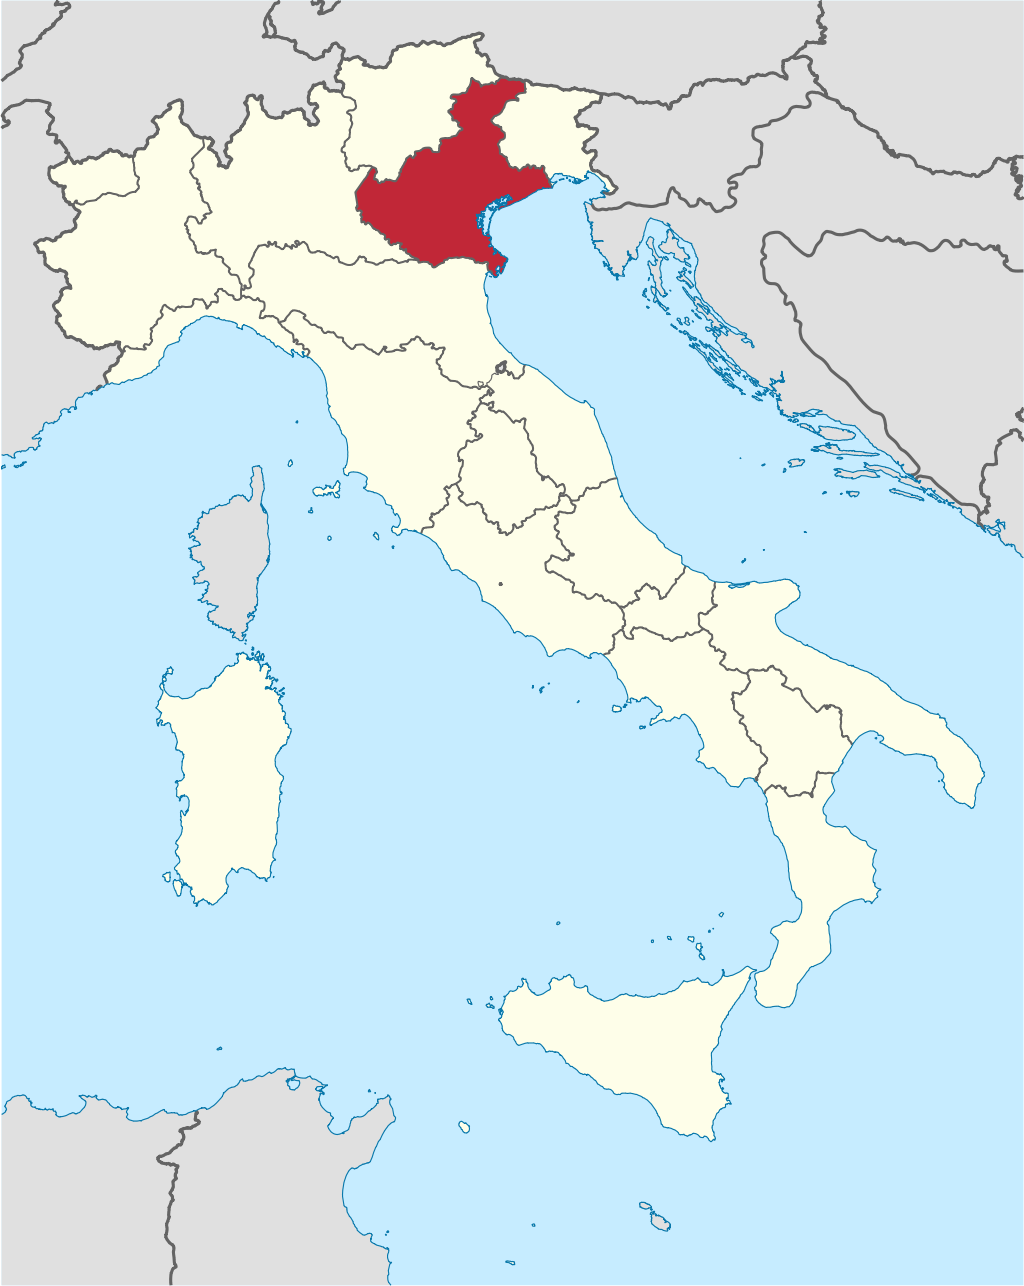 Spa Hotel Magnolia Urbex locatie in of rond de regio Veneto (Padua), Italy